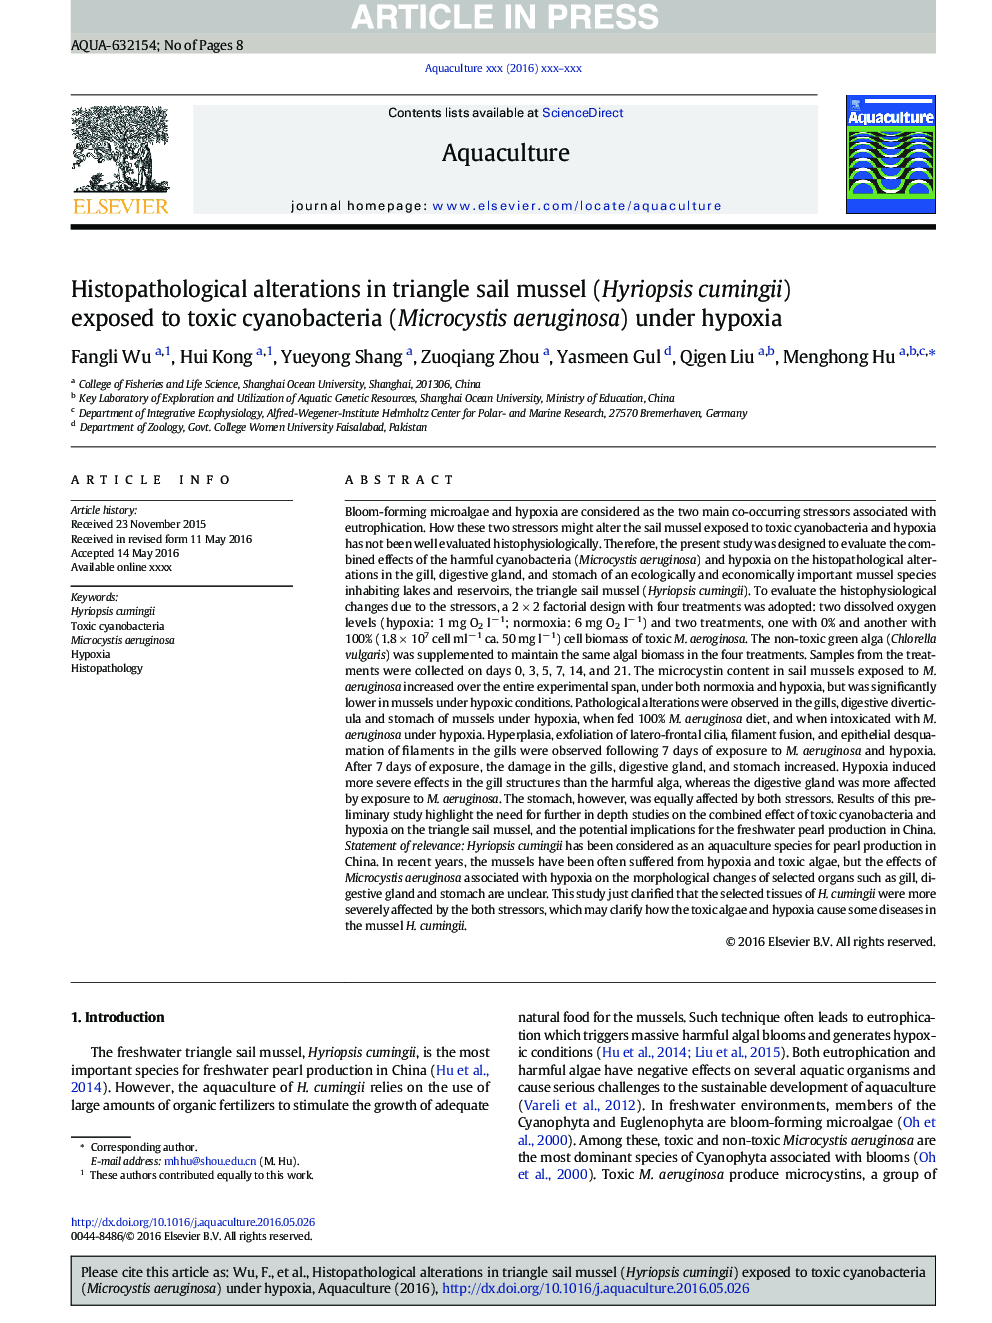 Histopathological alterations in triangle sail mussel (Hyriopsis cumingii) exposed to toxic cyanobacteria (Microcystis aeruginosa) under hypoxia